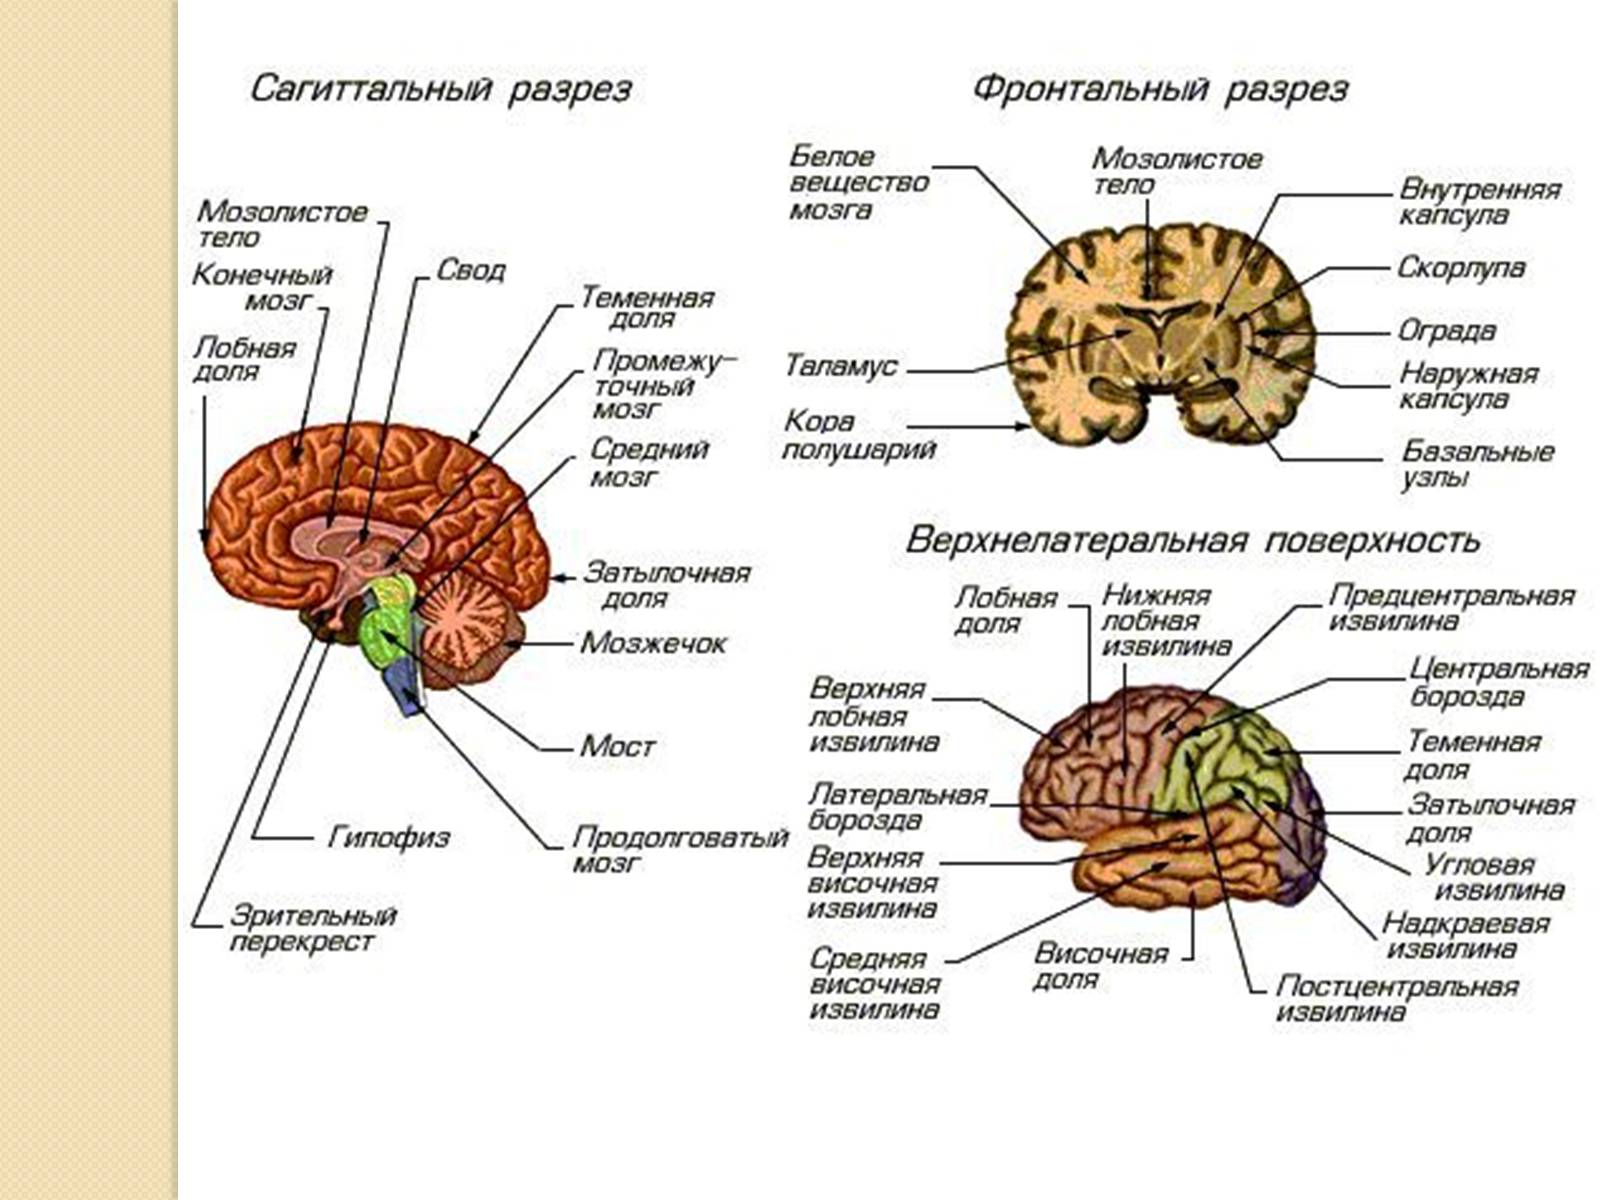 Признаки характеризующие кору головного мозга. Схема строения головного мозга. Схема строения отделов головного мозга. Внутреннее строение головного мозга. Строение и функции отделов головного мозга человека.